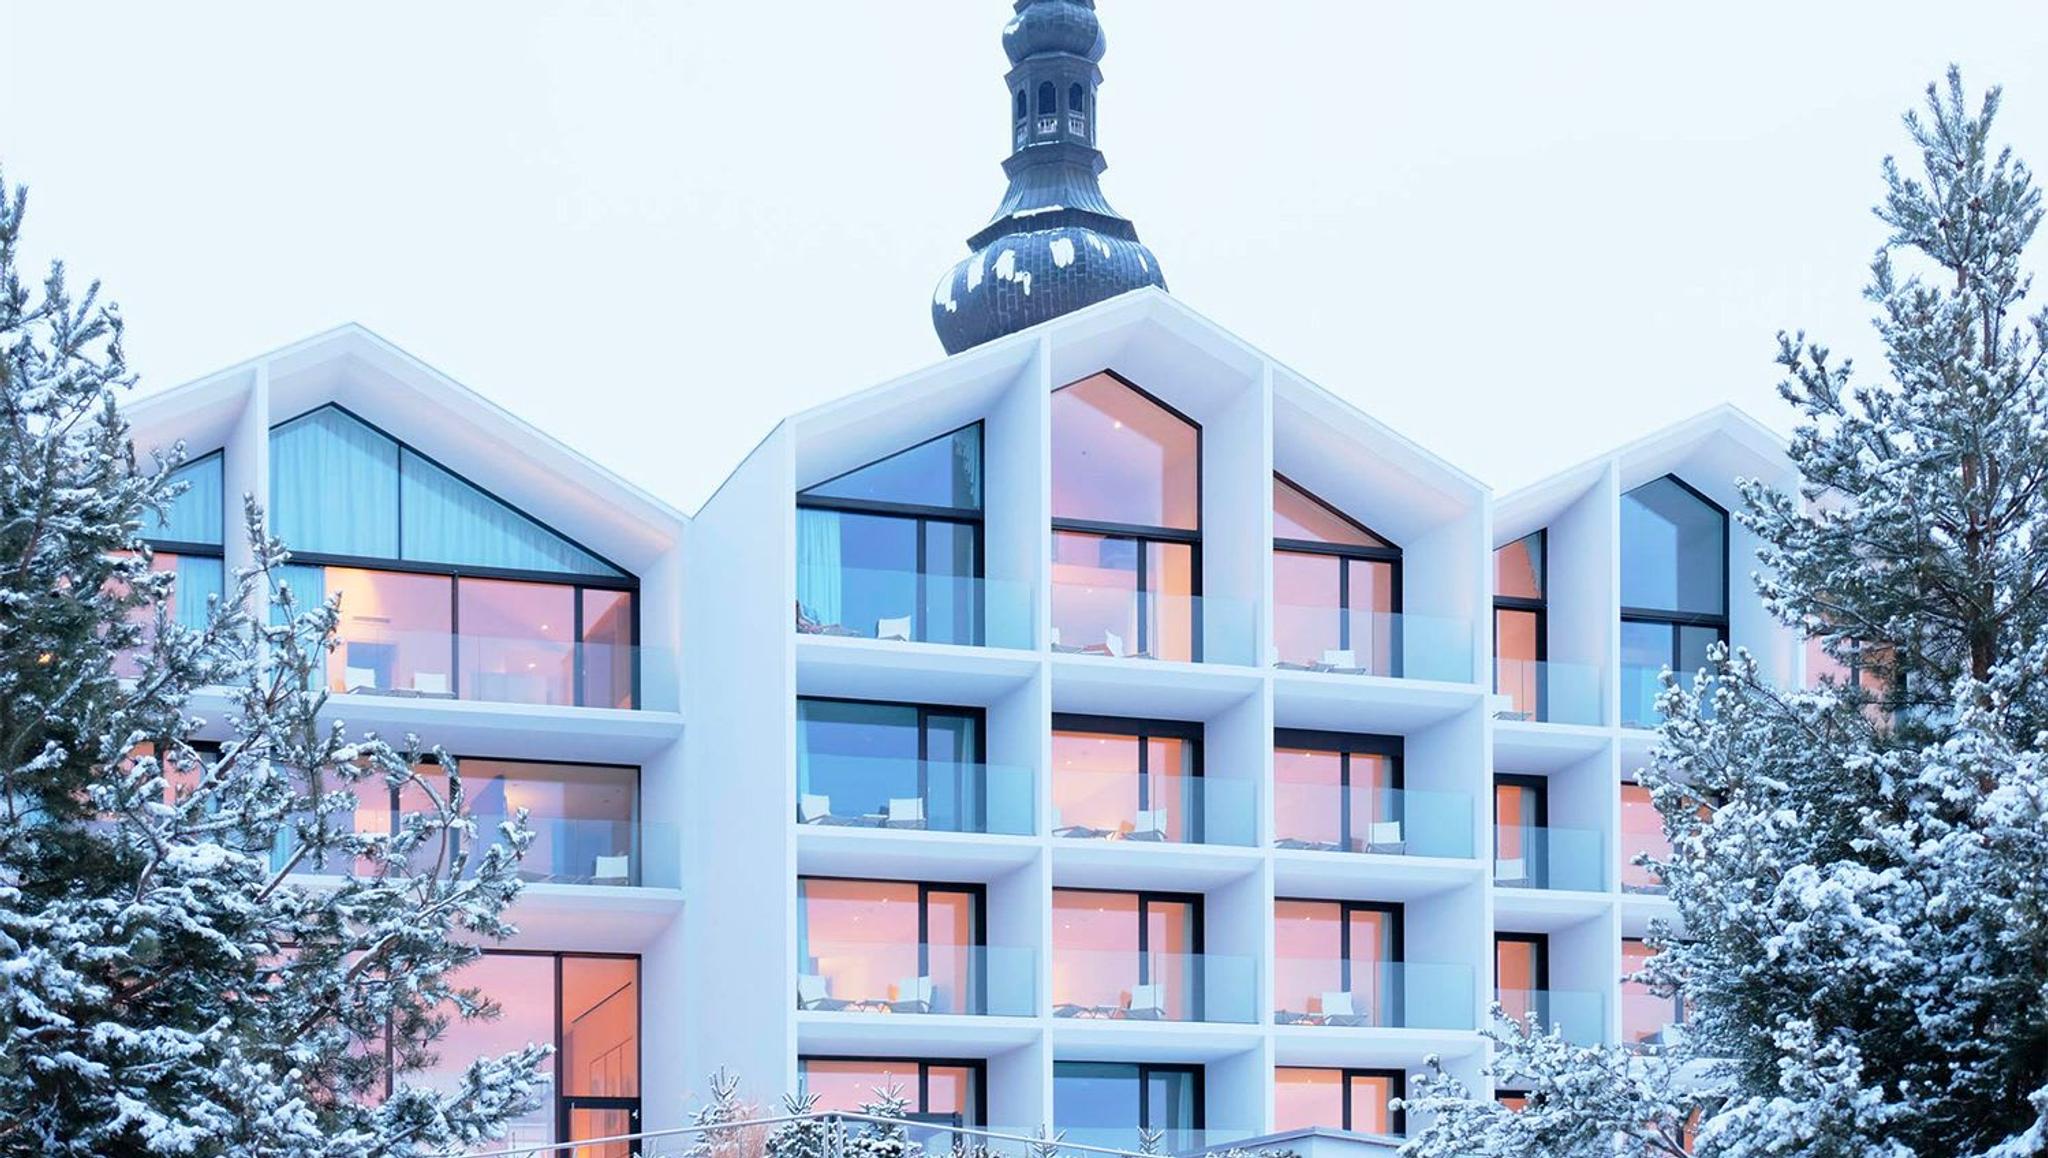 Schgaguler Hotel: Essenzielles Design in den Alpen